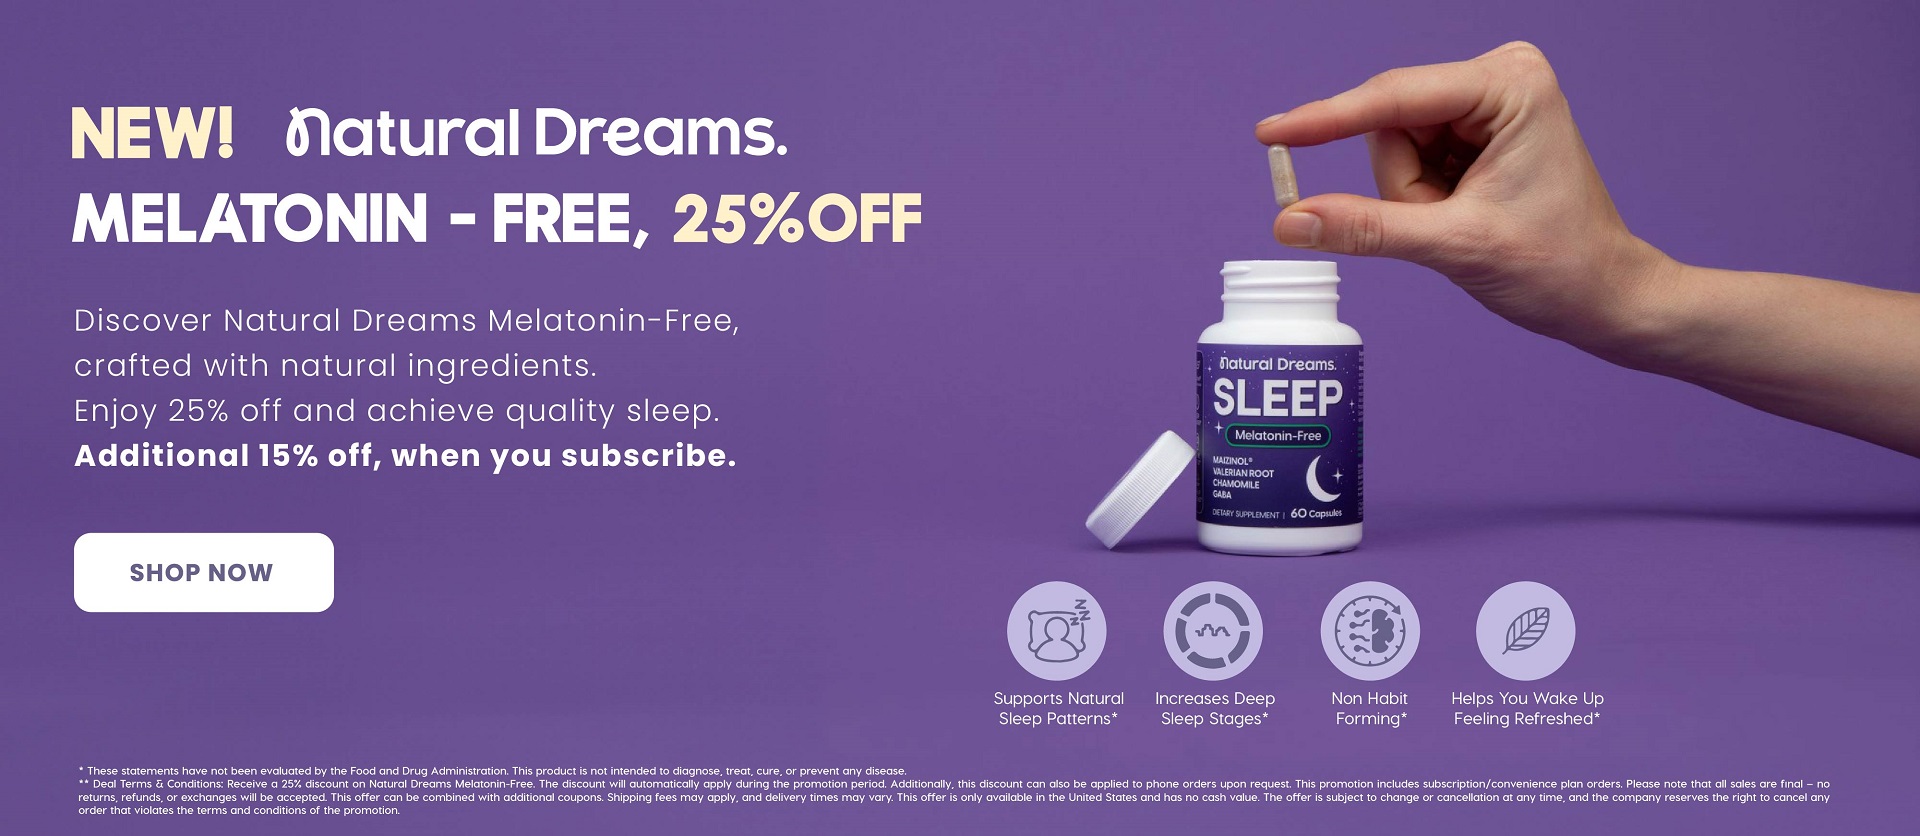 New! Natural Dreams Melatonin-Free : 25% off 